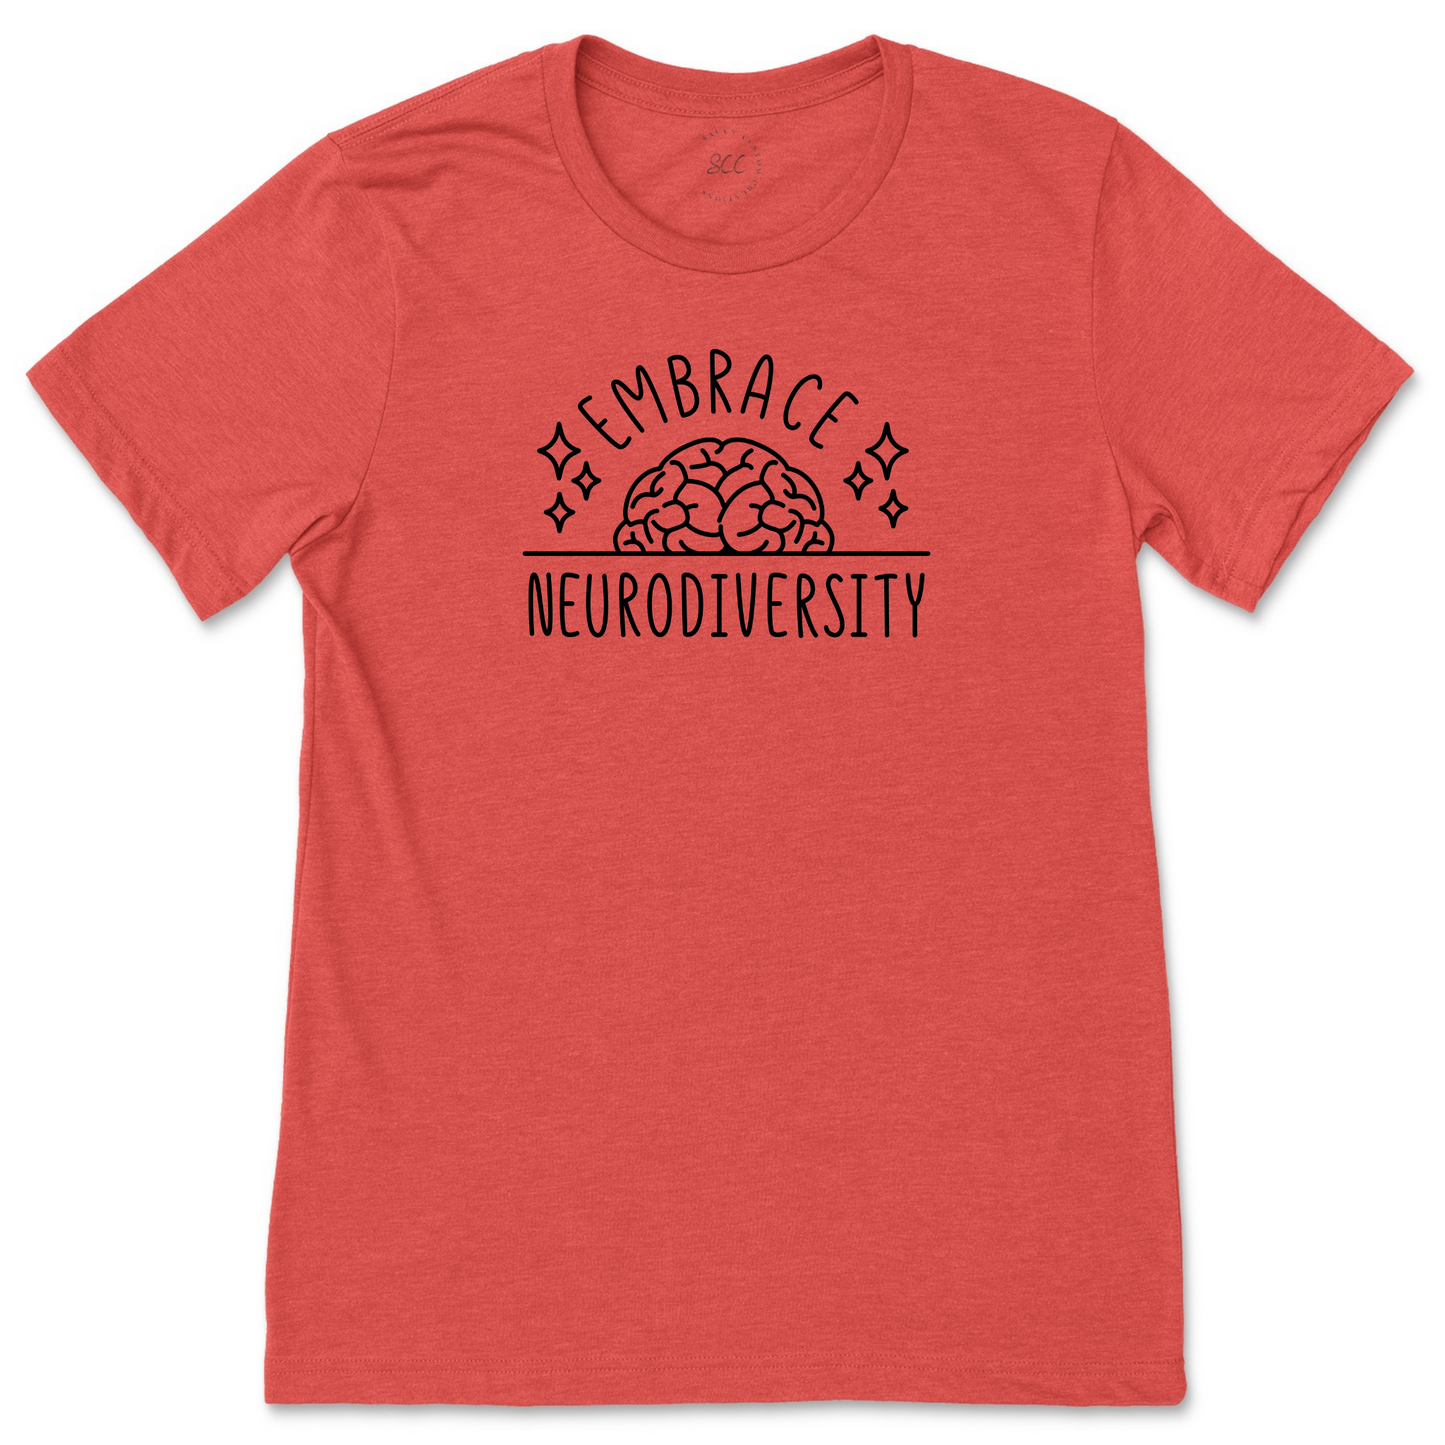 EMBRACE NEURODIVERSITY (Black Font) - Unisex crewneck T-shirt